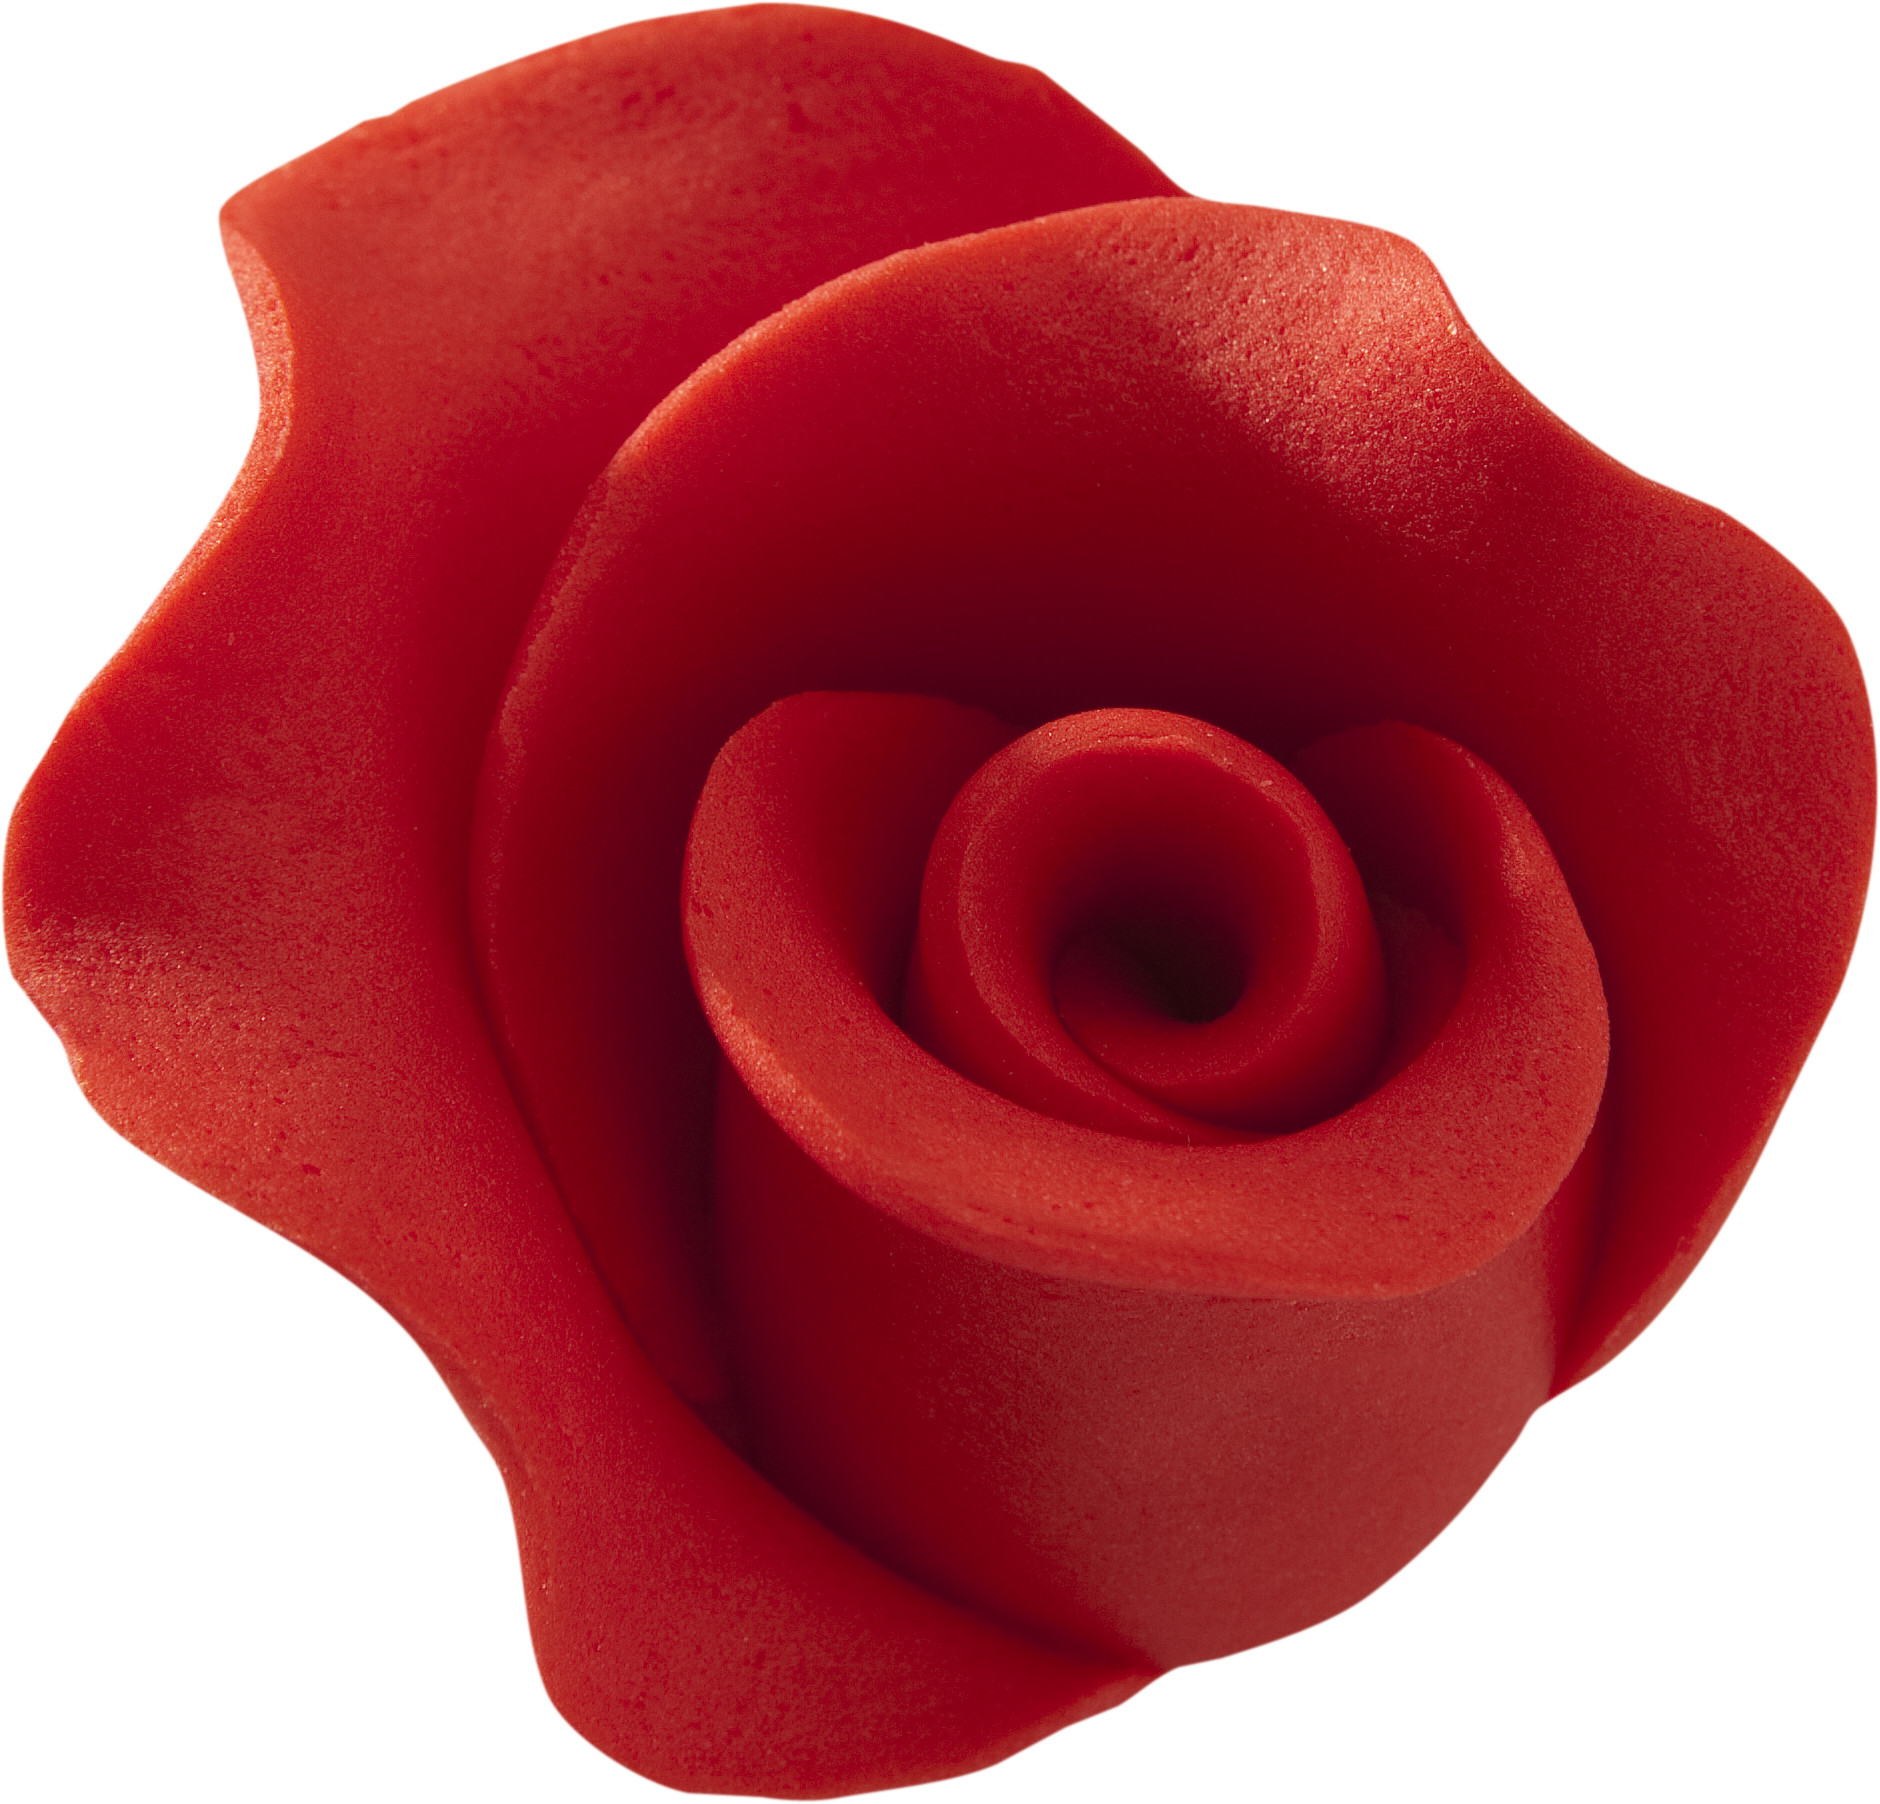 Trandafir din zahar mediu rosu 051302 GPR